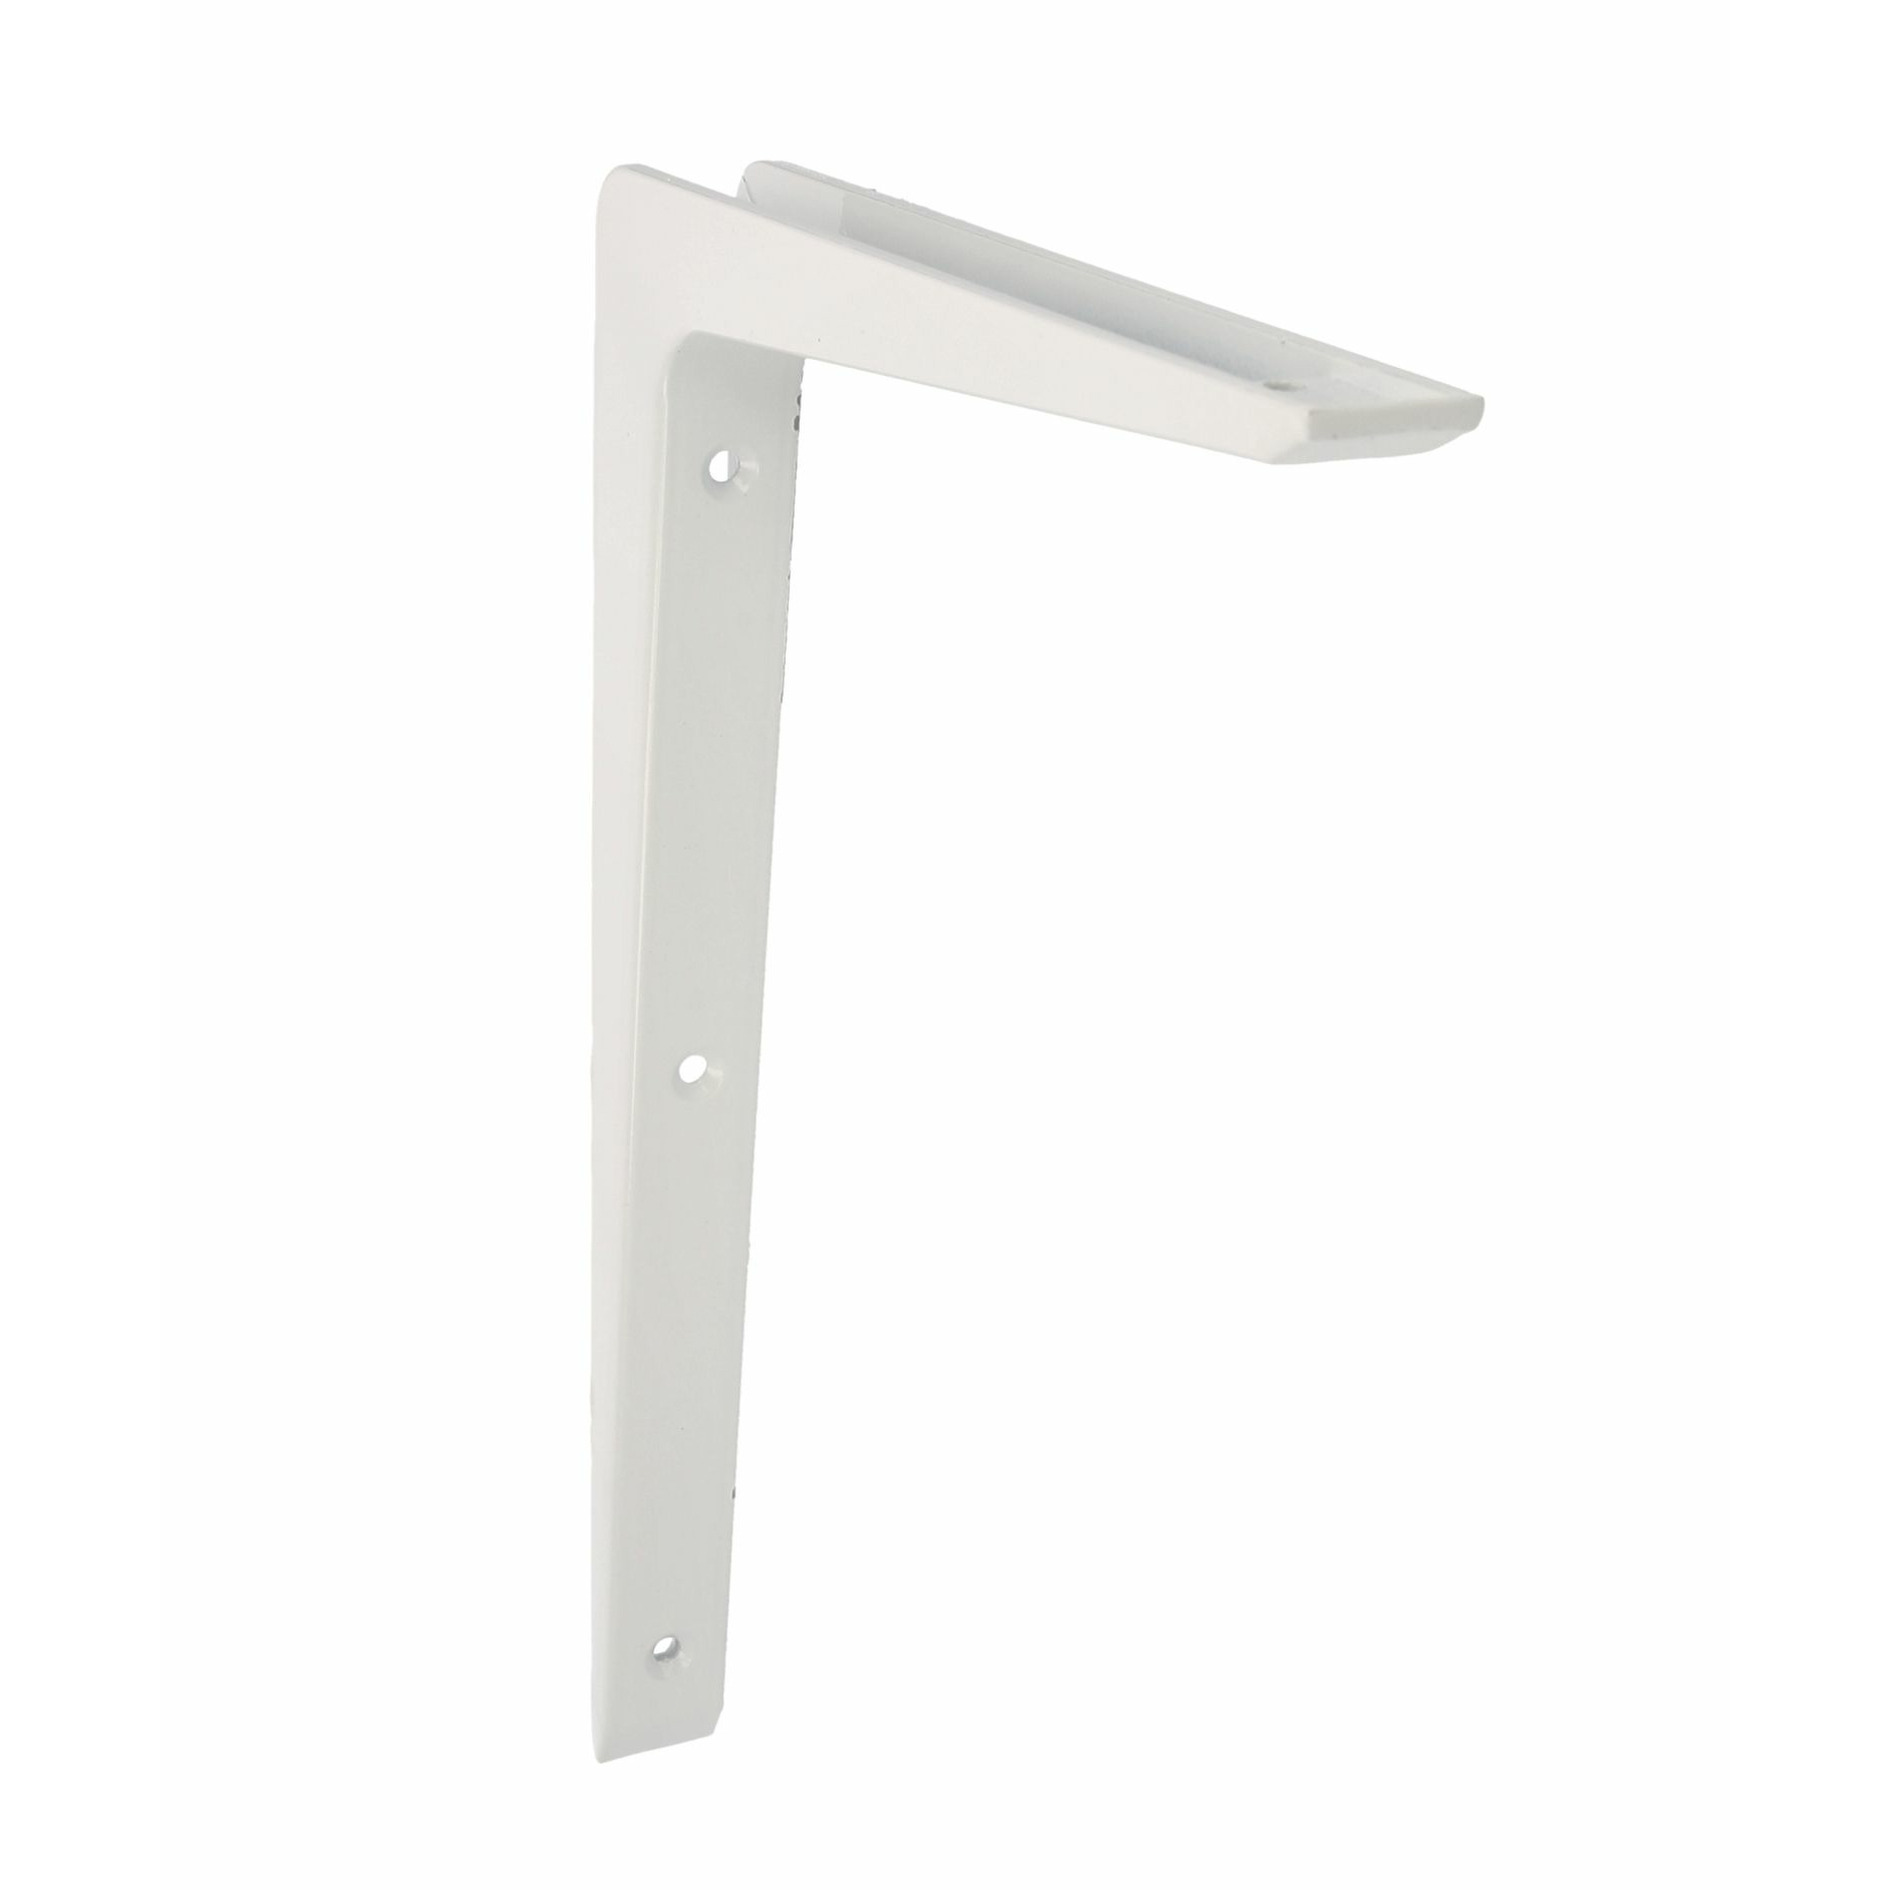 AMIG Plankdrager/planksteun van aluminium - gelakt wit - H250 x B200 mm -